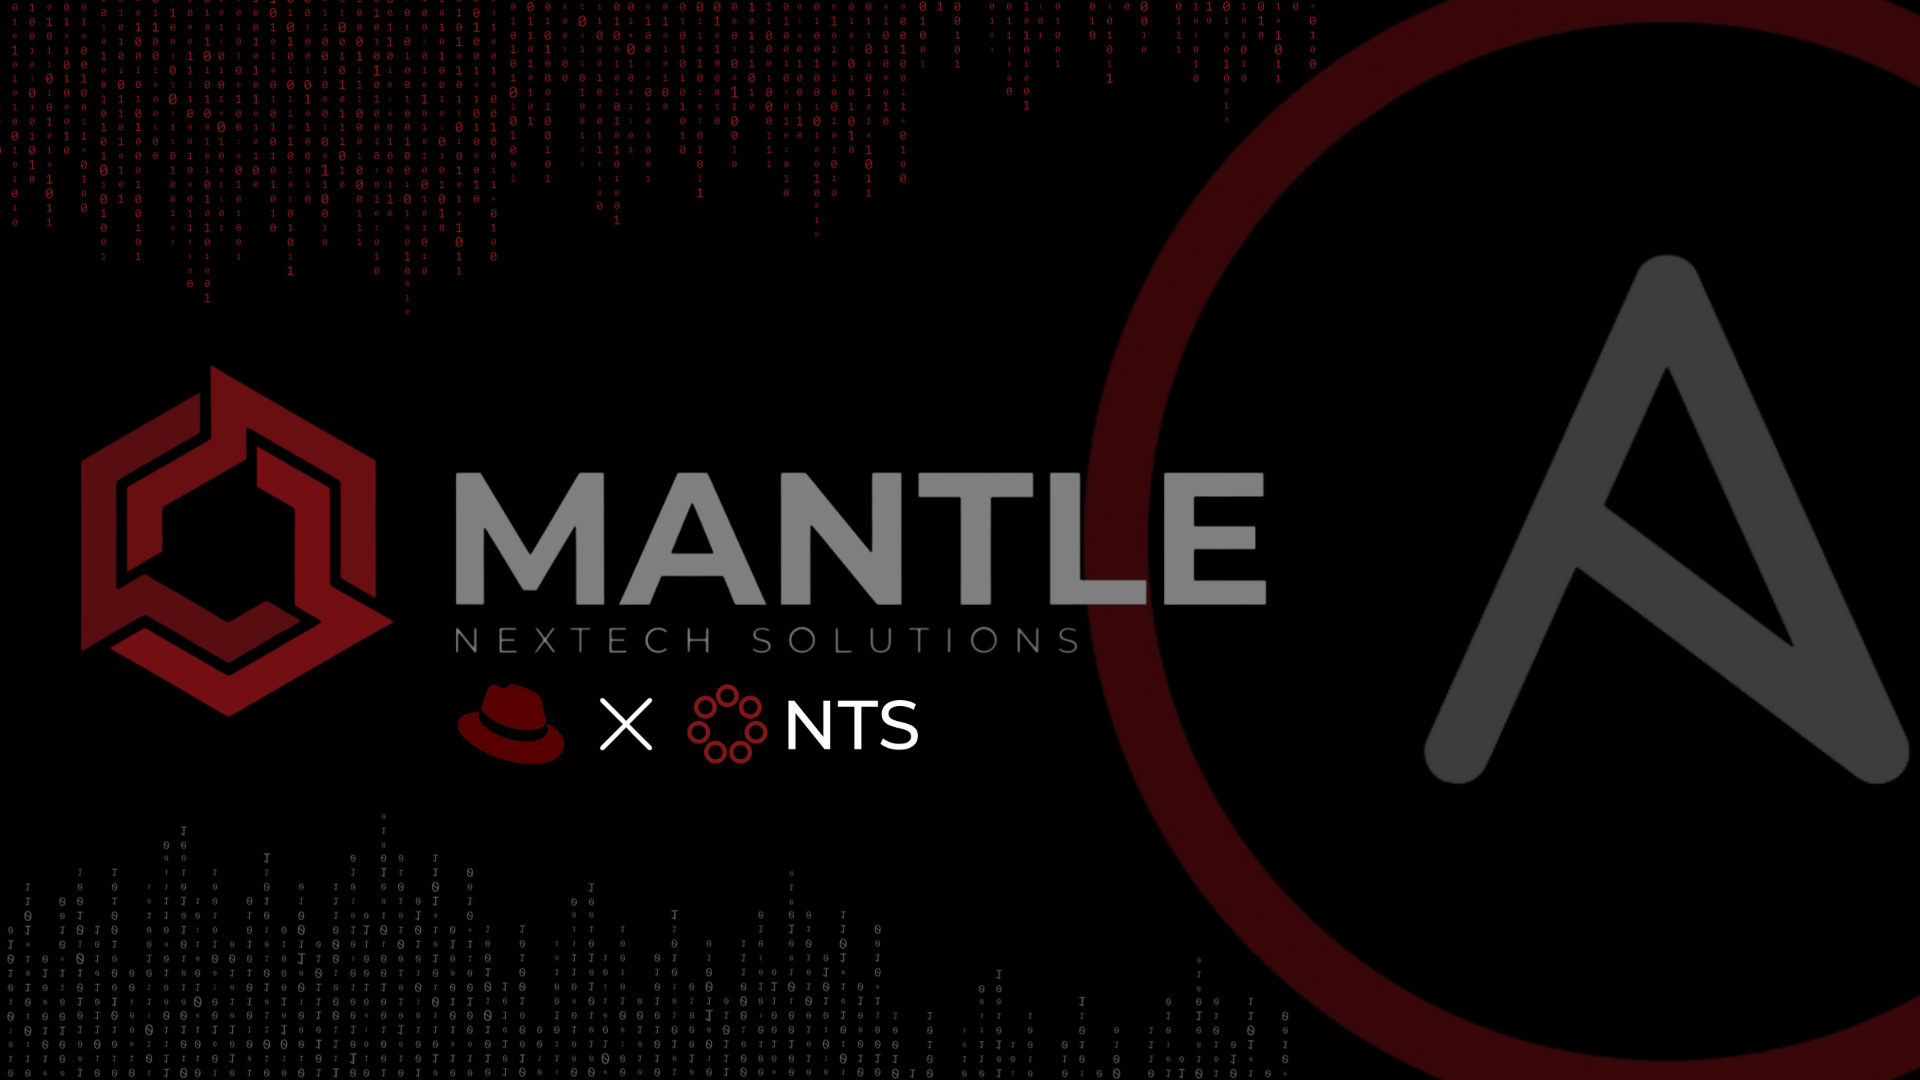 a mantle x nts logo on a black background.